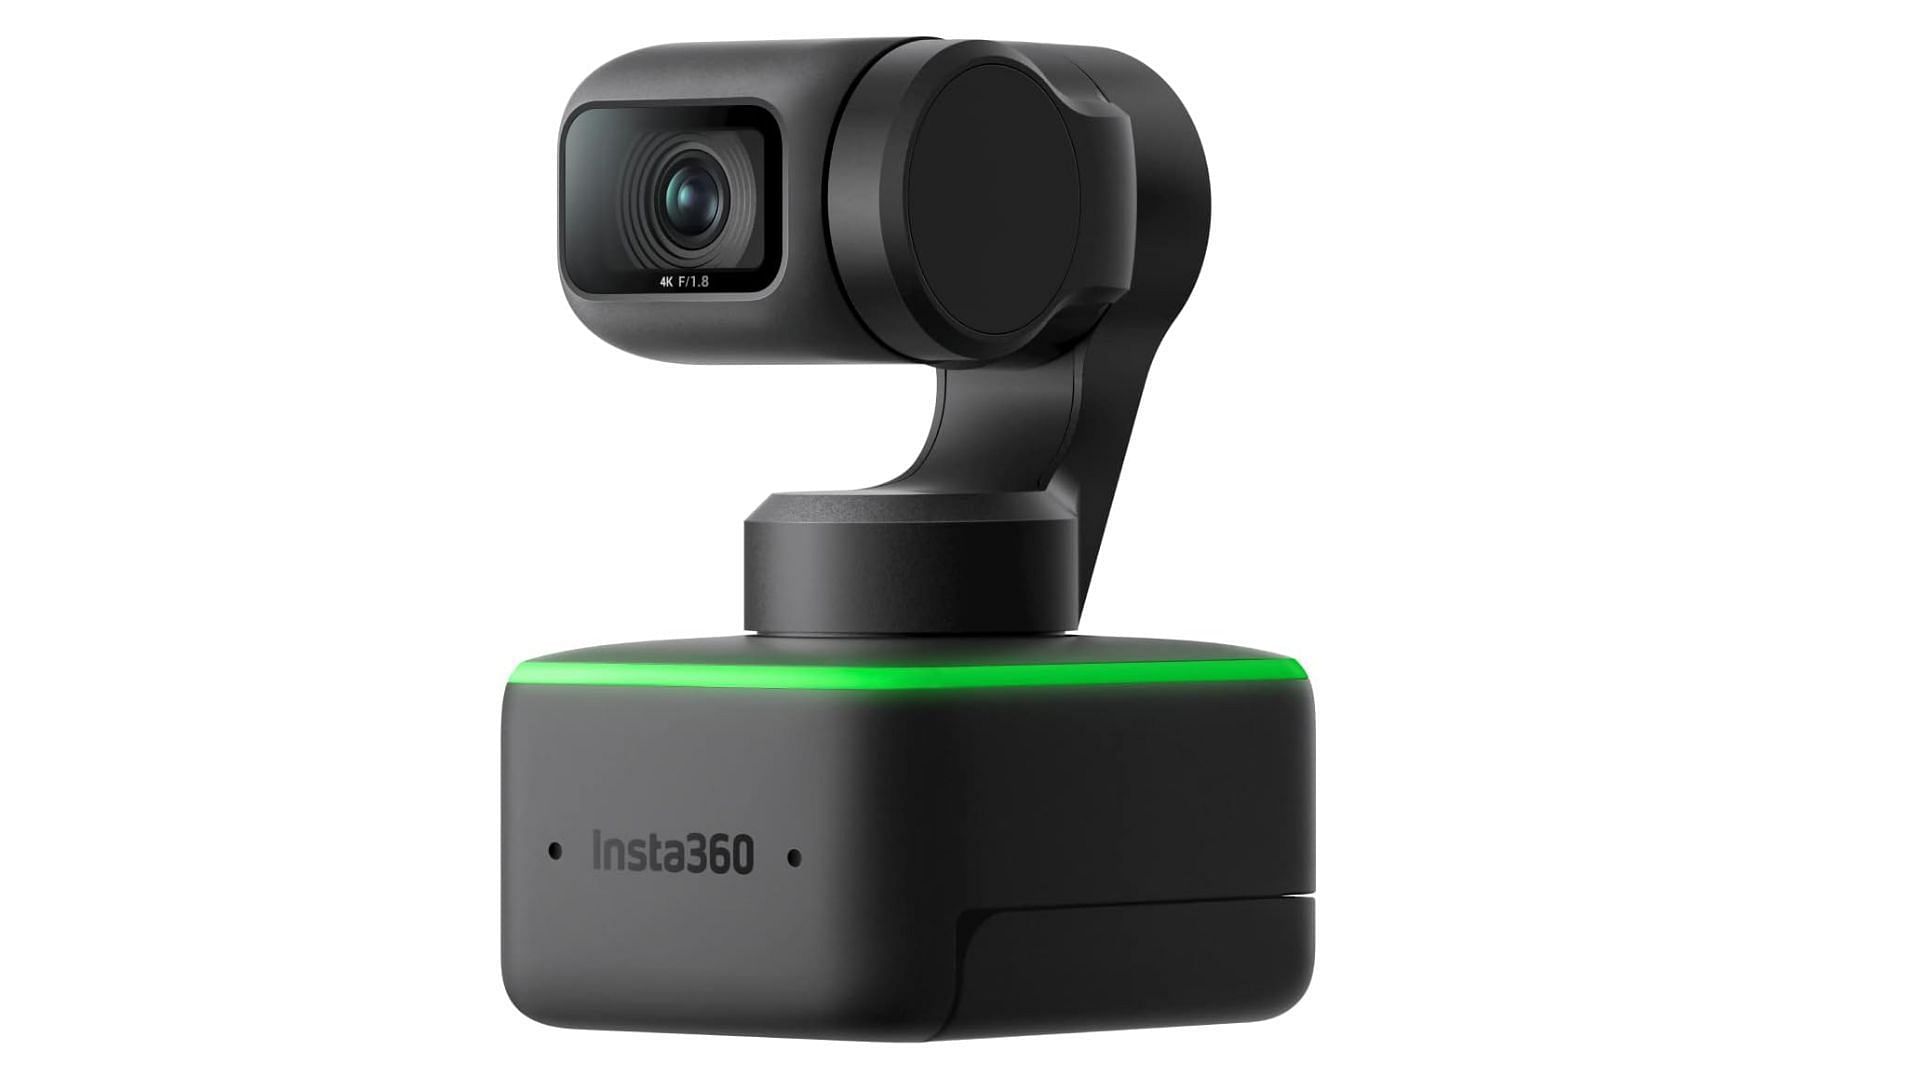 Premium webcam with advanced AI features (Image via Insta360/Ubuy)